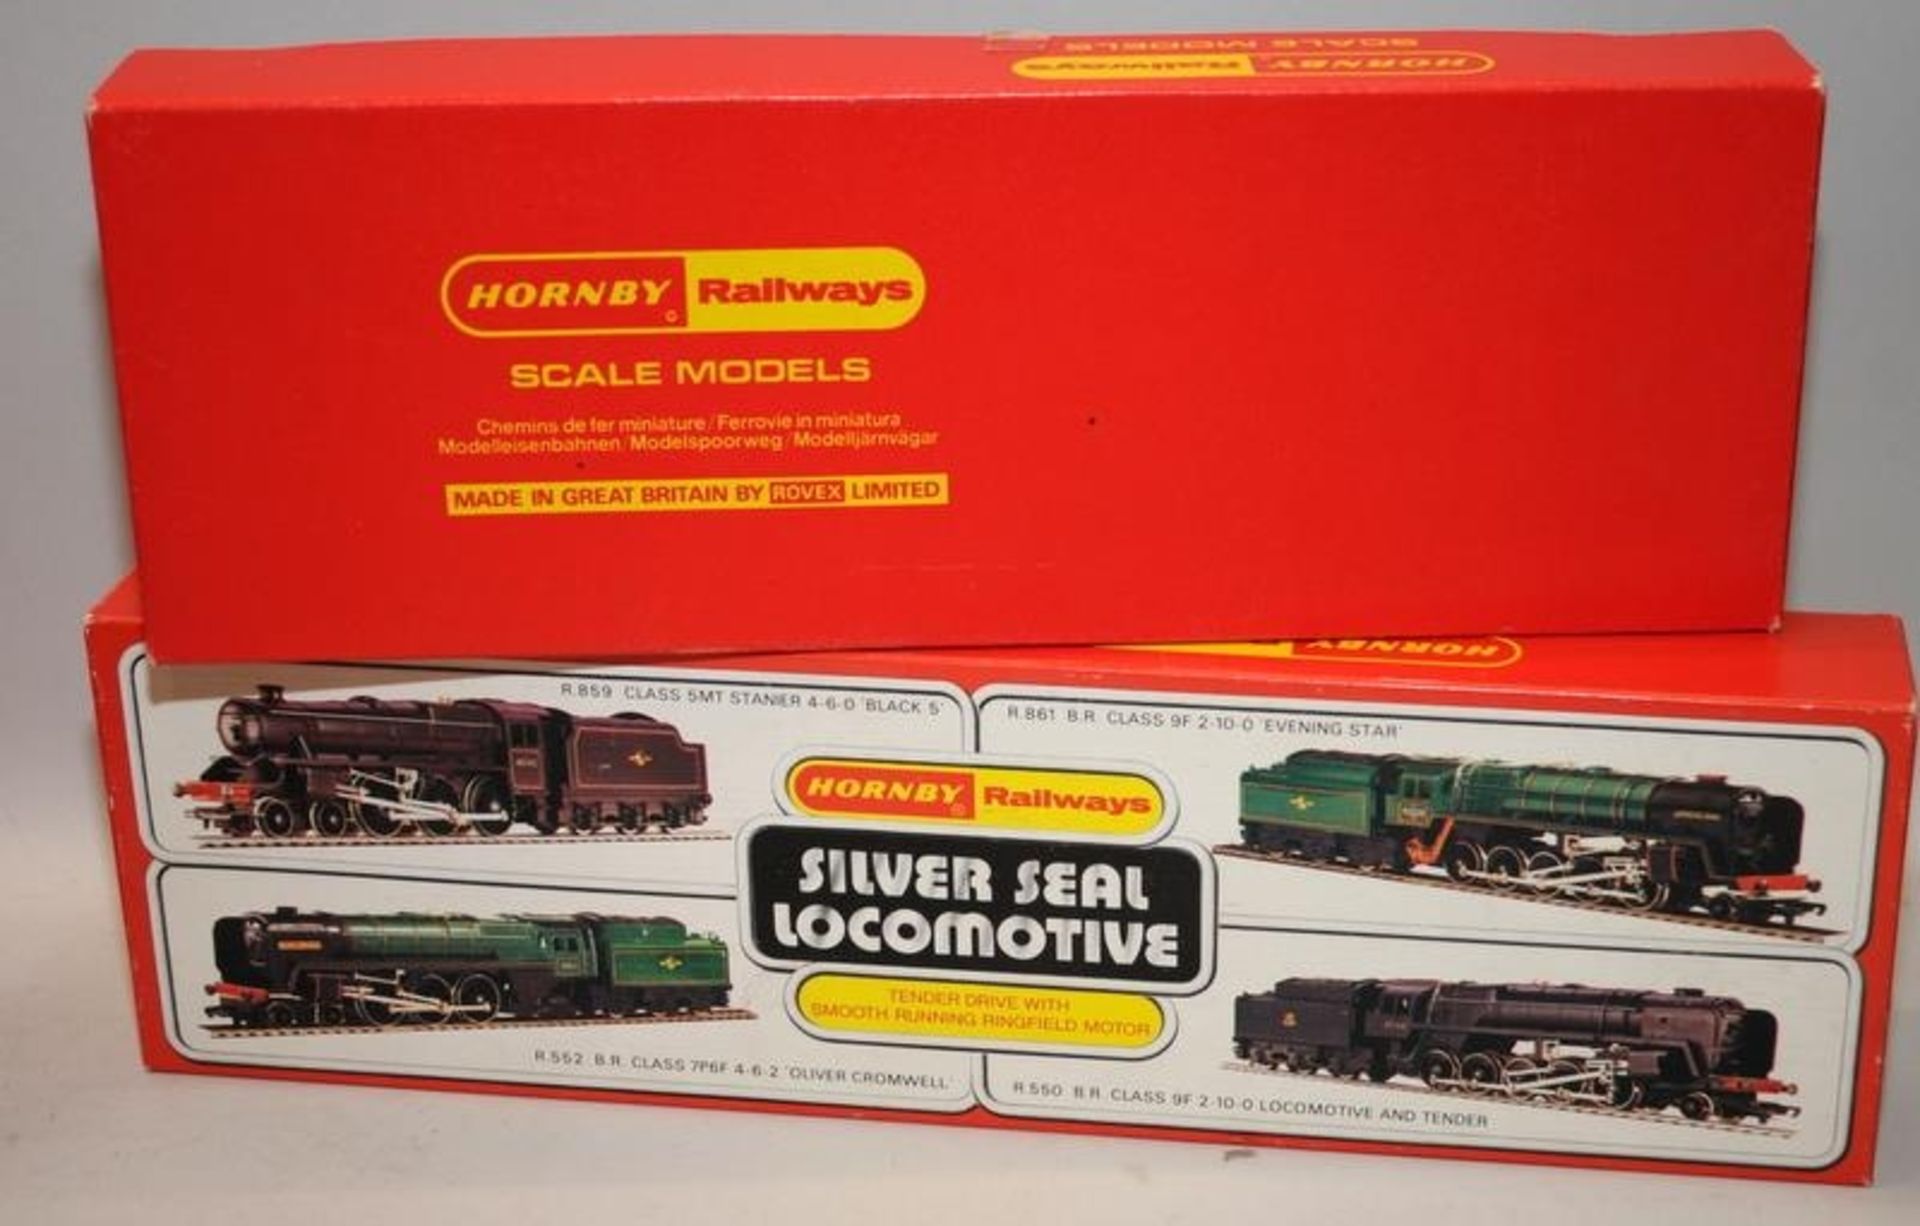 Hornby OO gauge BR Locomotive Black Five Class ref:R859 c/w LMS Class 2P Fowler Locomotive ref:R450.